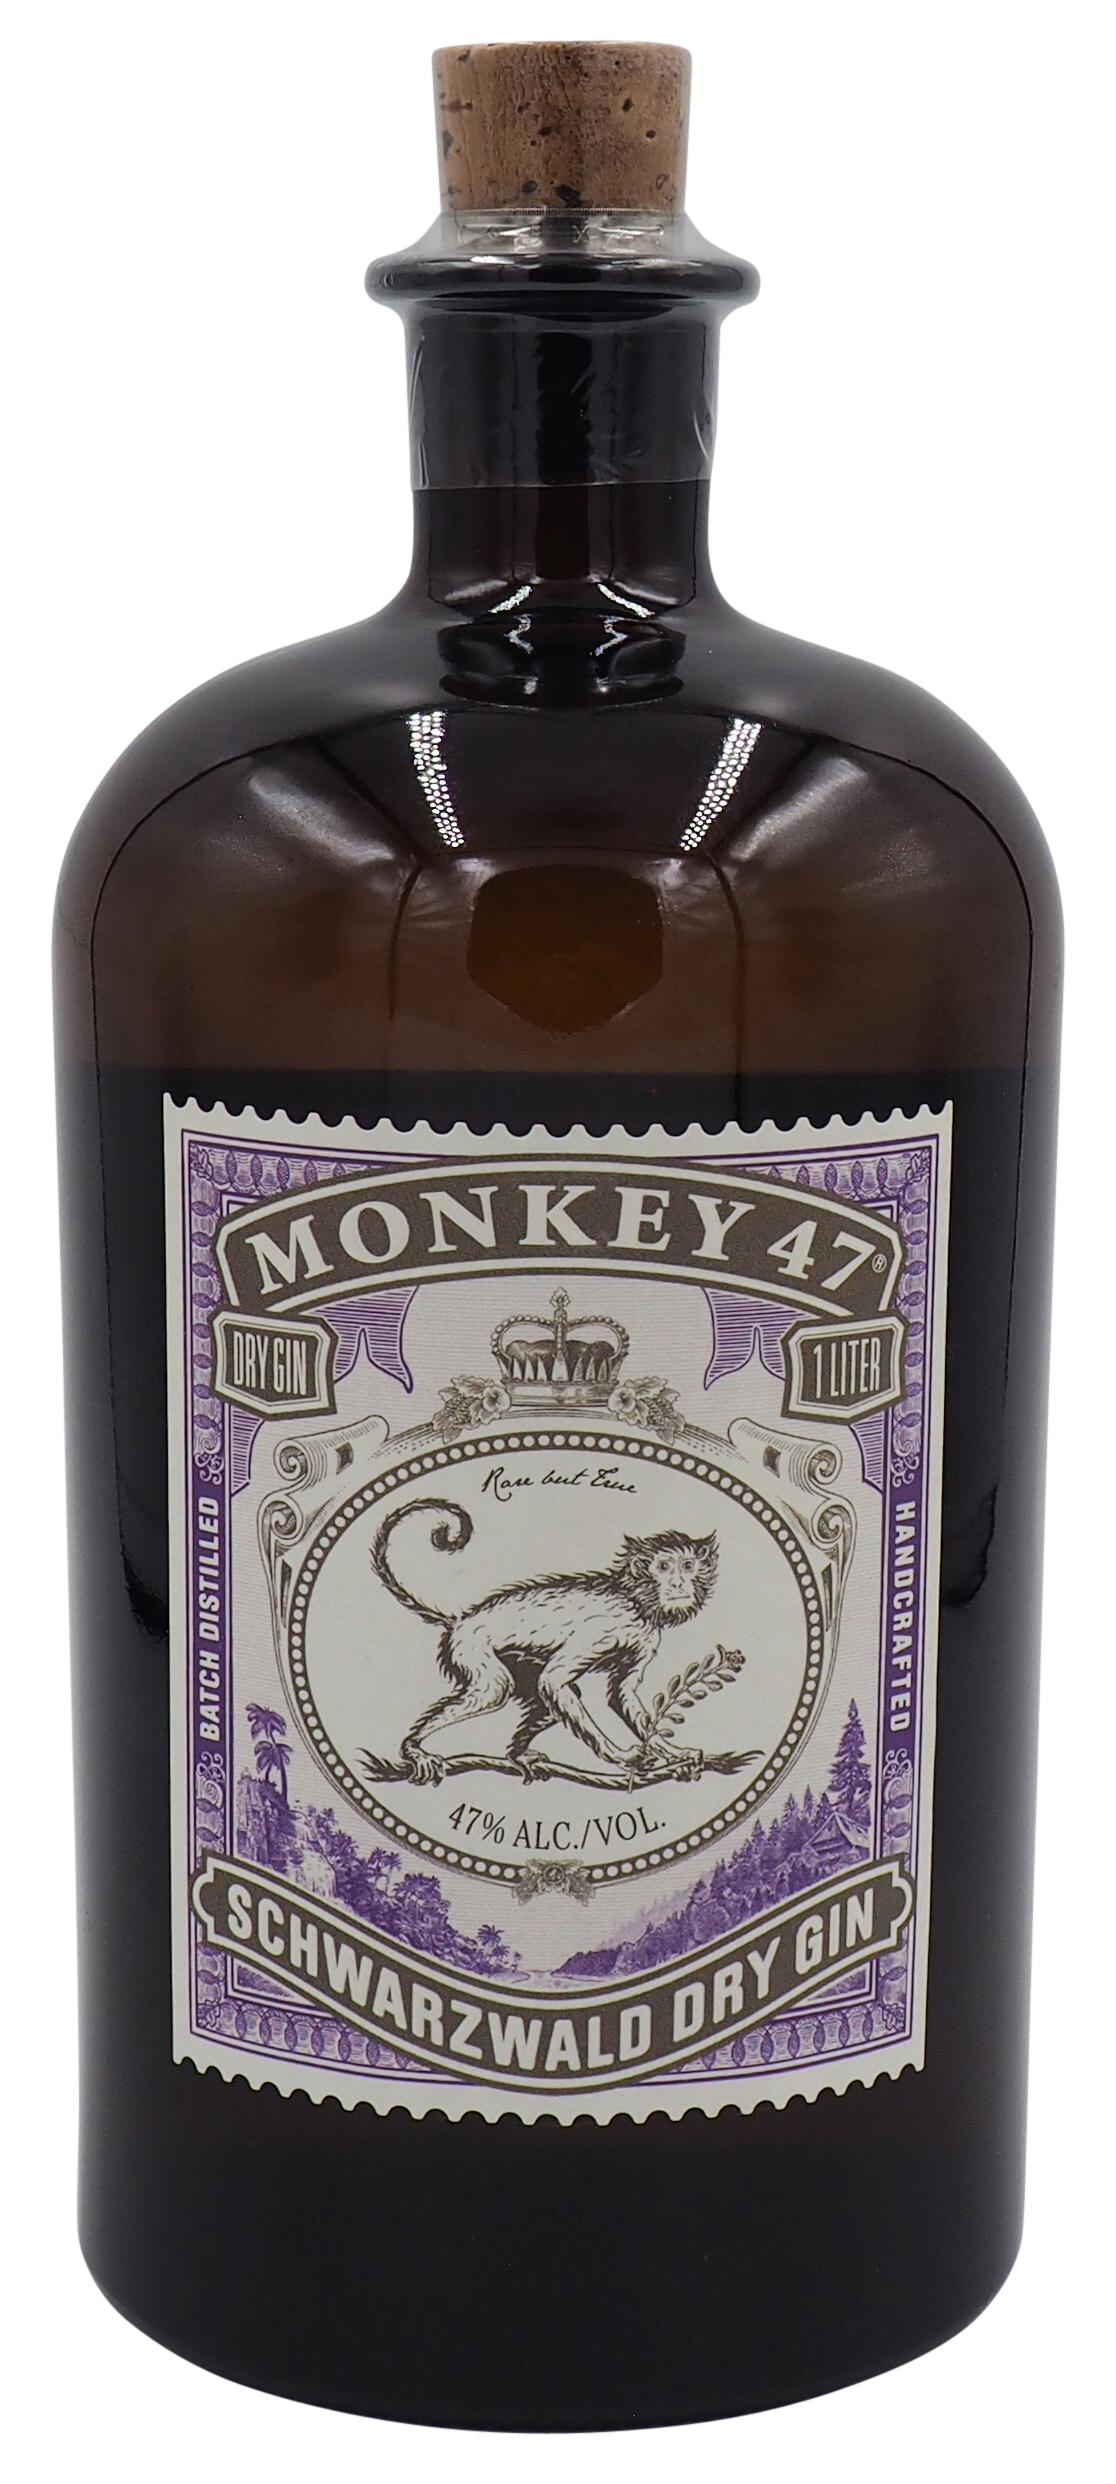 Monkey 47 Gin (1 Liter)